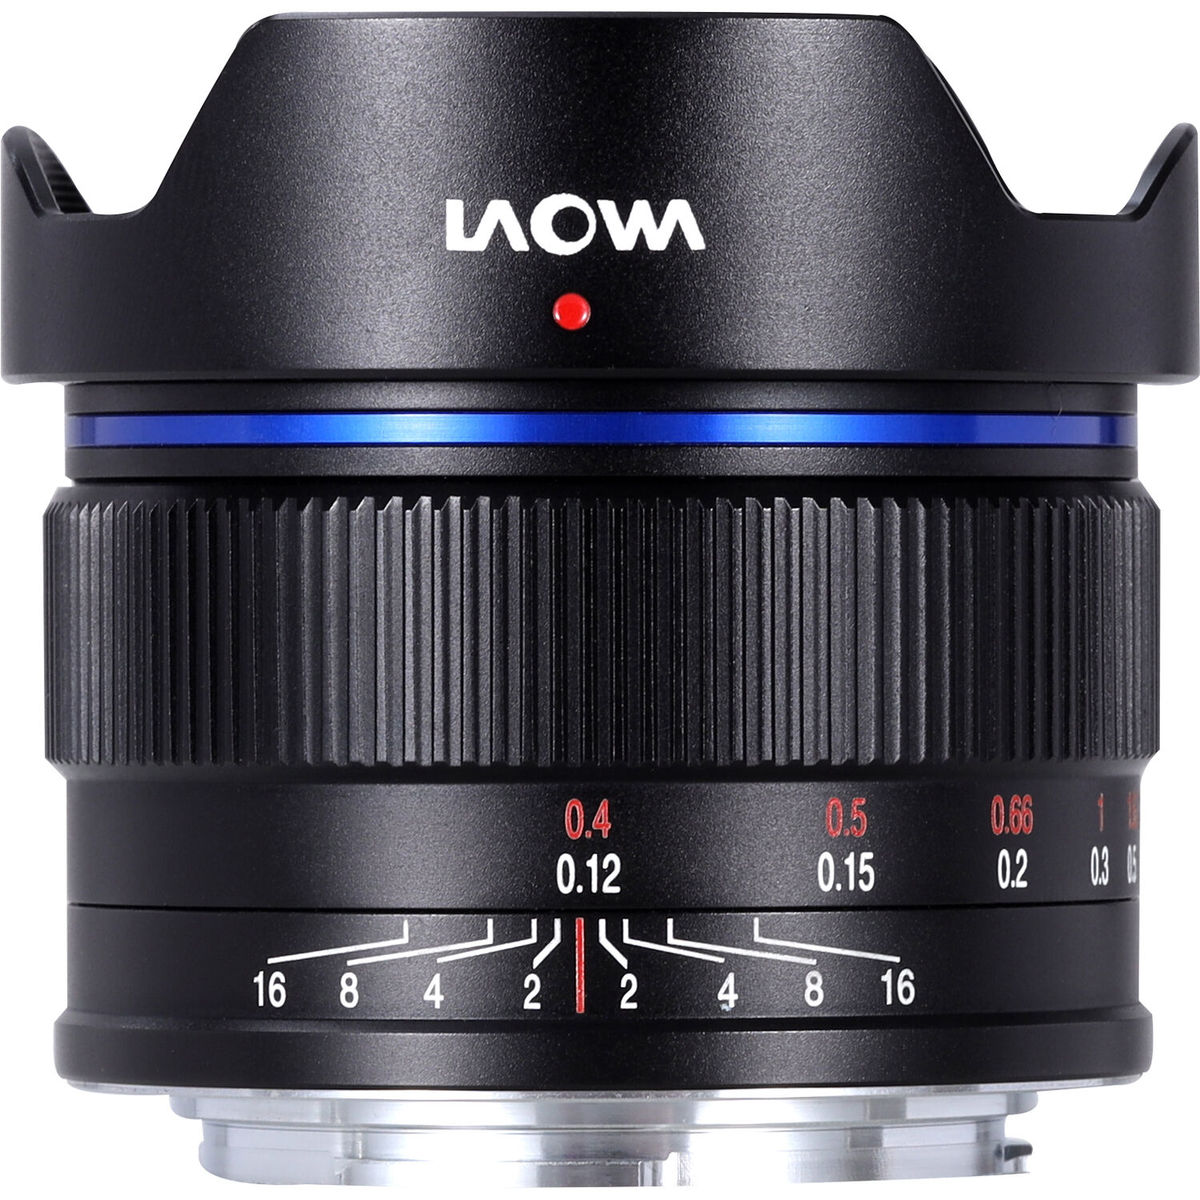 2. Laowa Lens 10mm f/2.8 Zero-D (MFT)